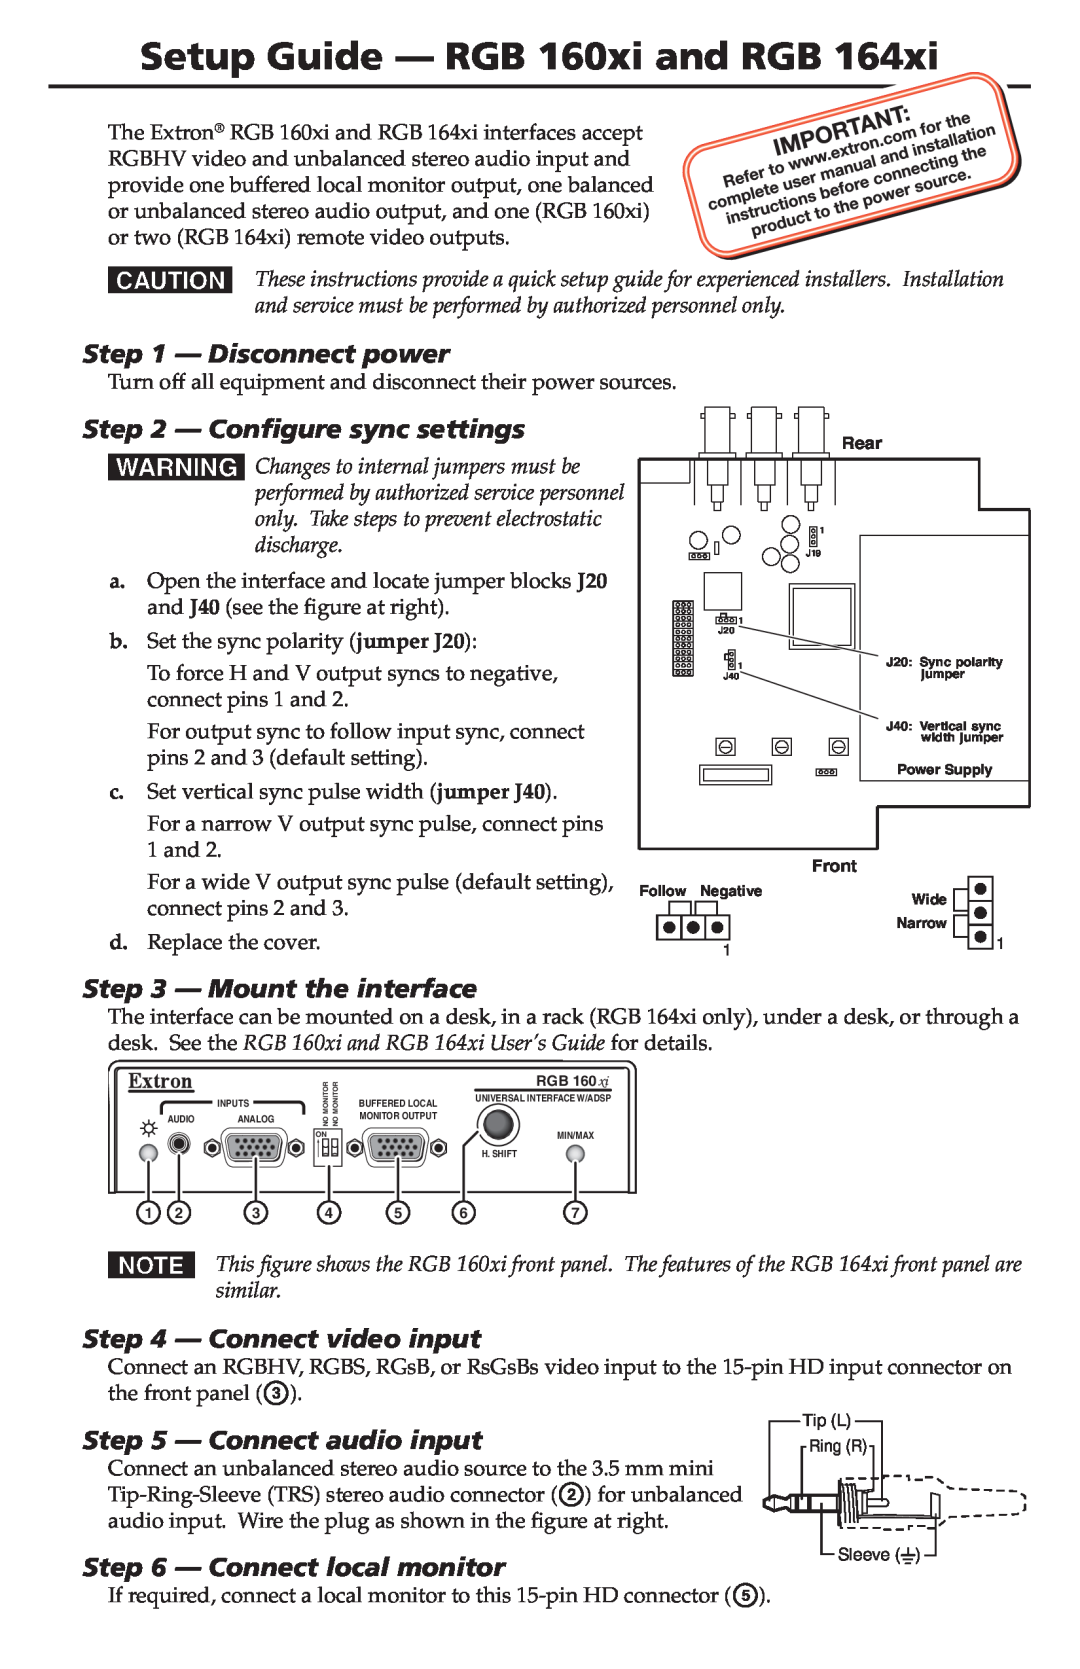 Extron electronic RGB 160XI, RGB 164XI setup guide Disconnect power, Configure sync settings, Mount the interface 